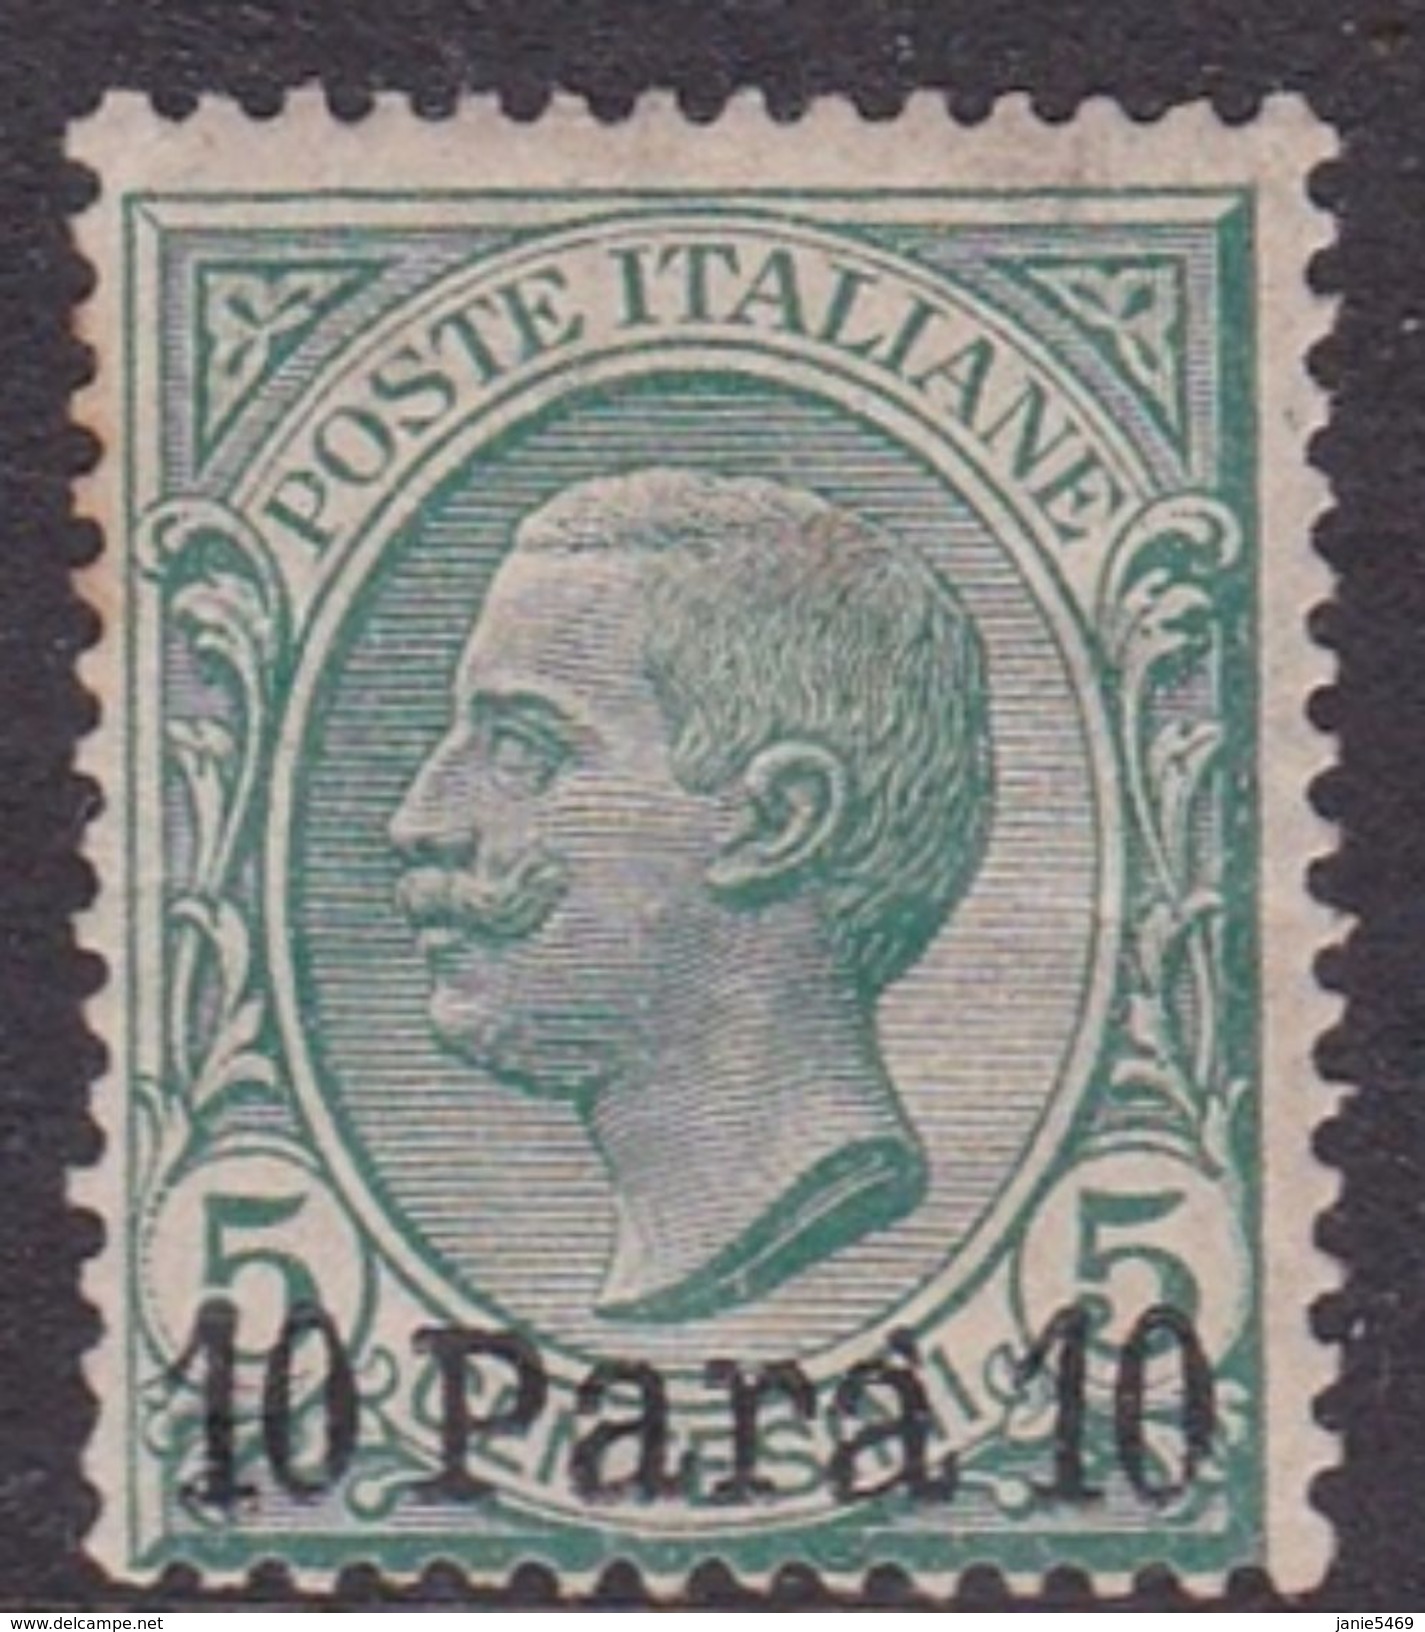 Italian Occupation Of Albania S10 1907  10 Para On 5c Green, Mint Never Hinged - Albanie